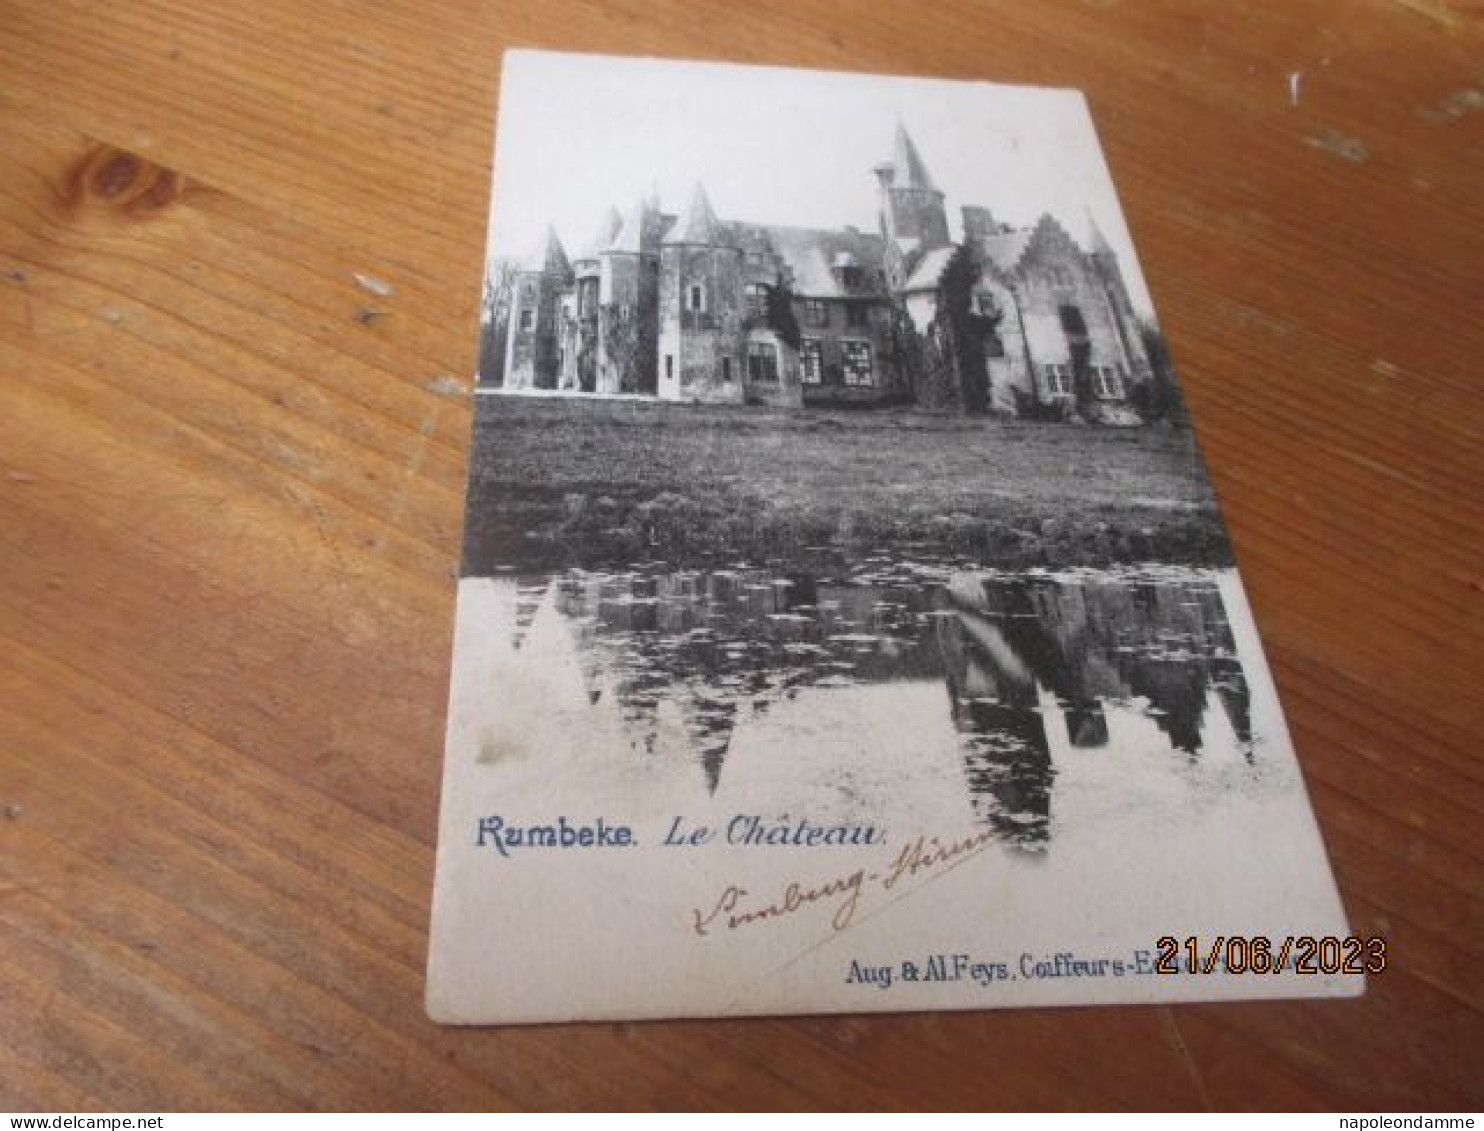 Rumbeke, Le Chateau, Edit Aug & Al Feys, Coiffeurs Editeurs - Roeselare